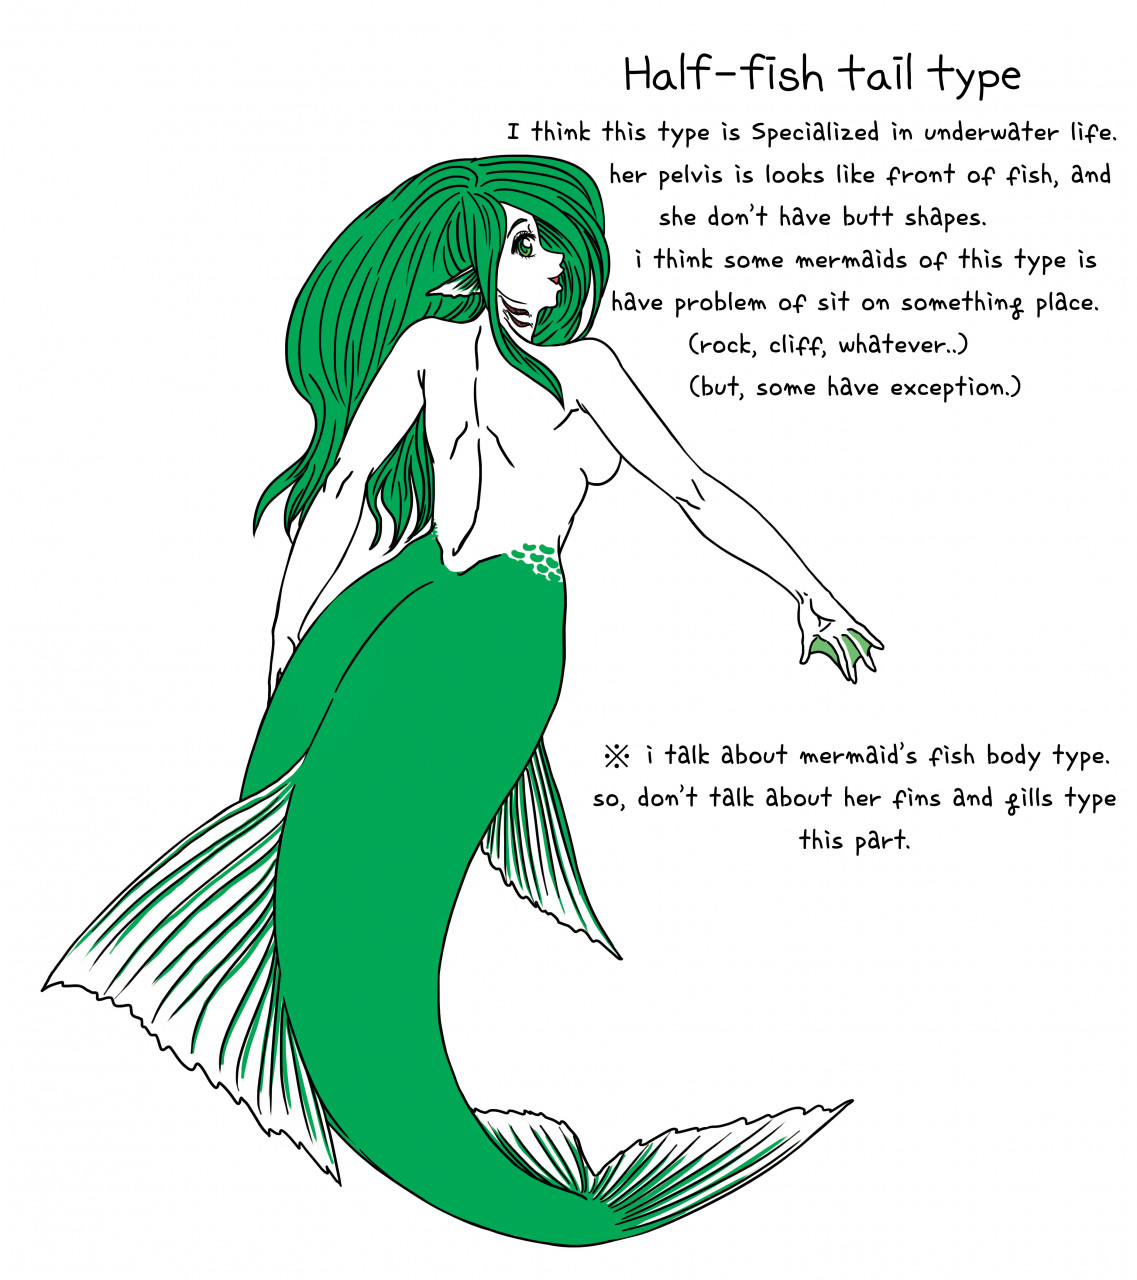 Mermaid's lower body type - Half-fish tail type by dragonflynetman